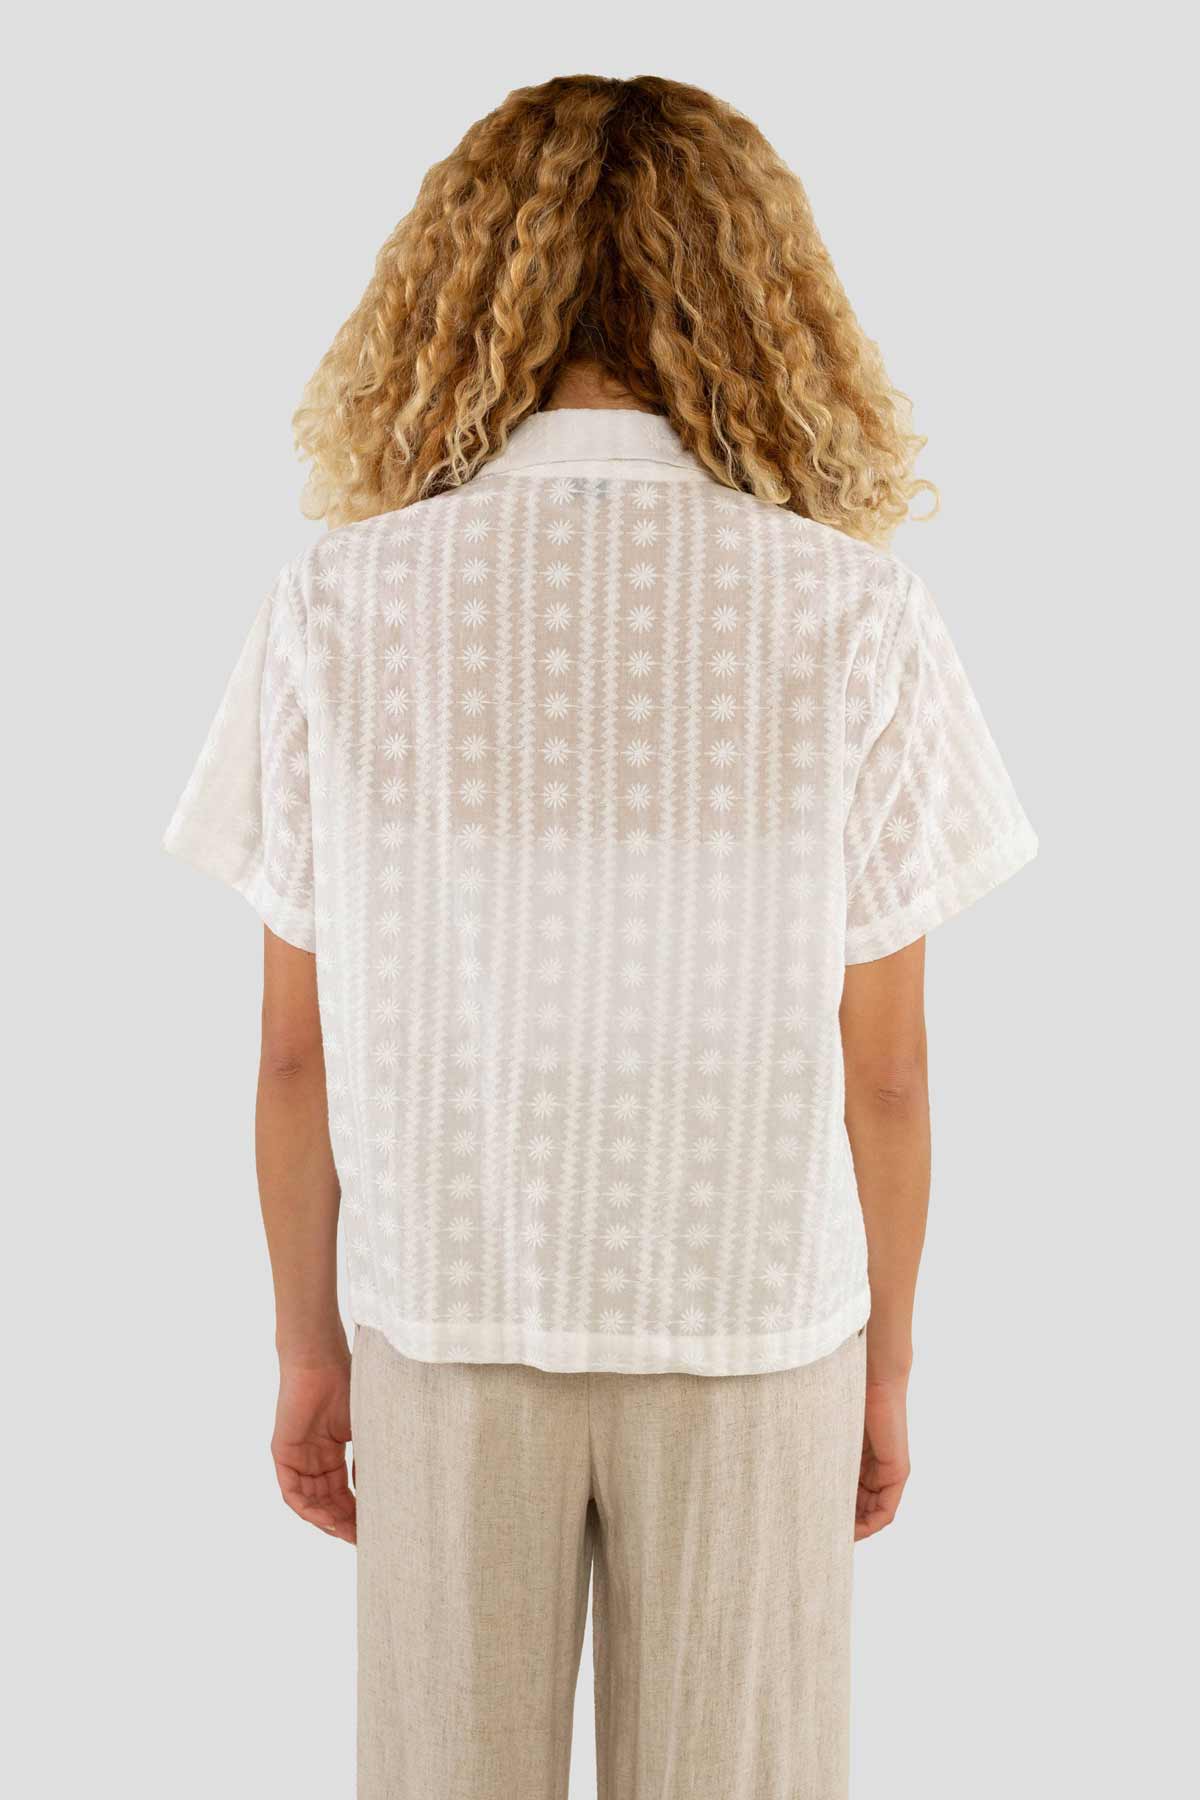 Helio Embroidery Shirt